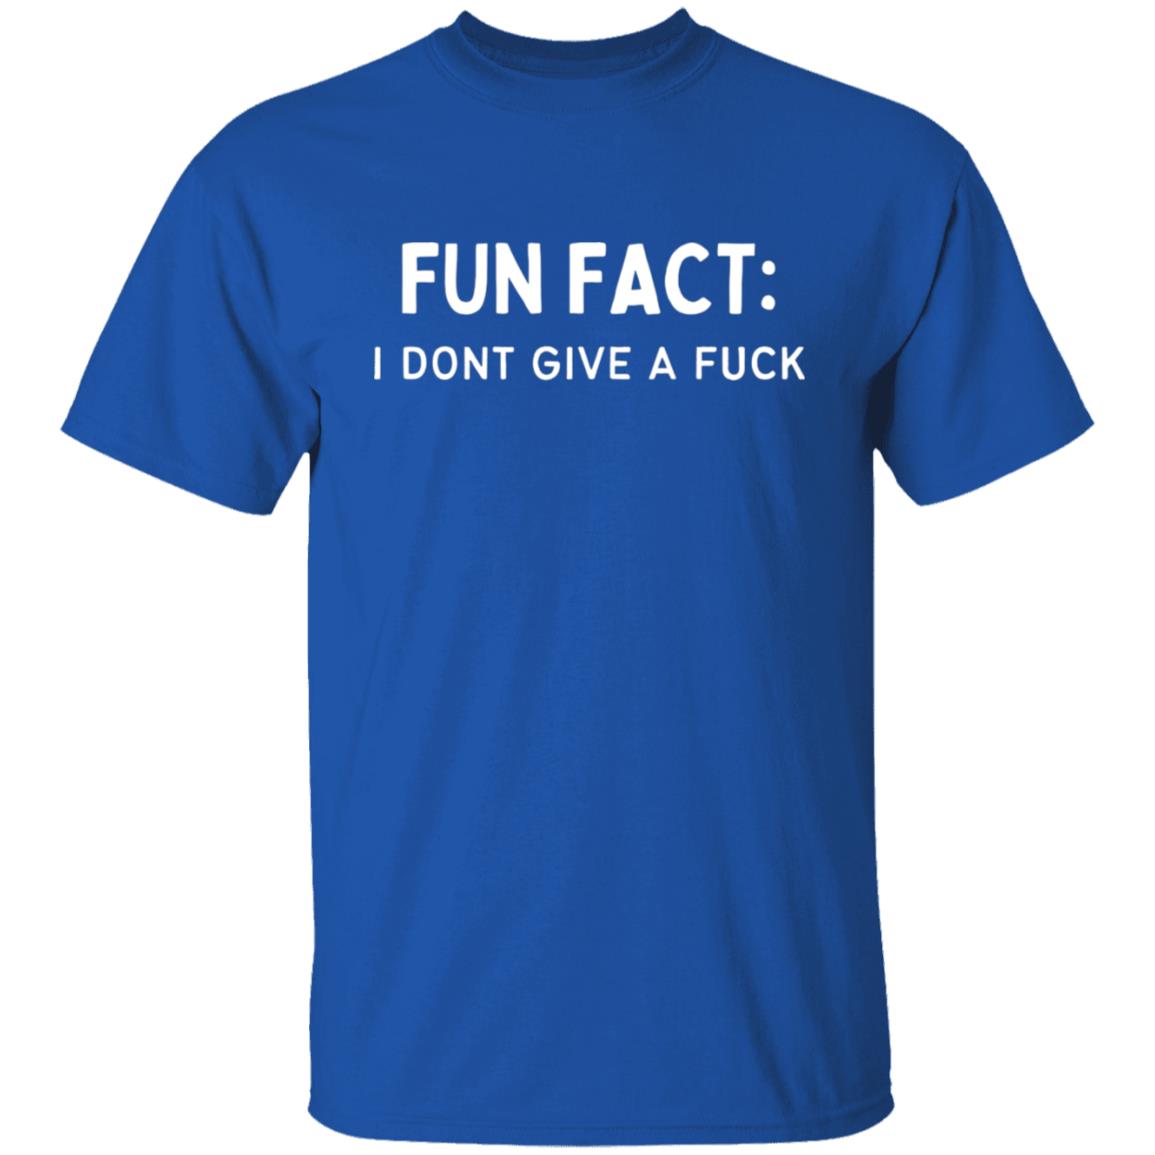 Fun Fact I Don't Give A Fu$K Sarcastic Bad Attitude T-Shirt